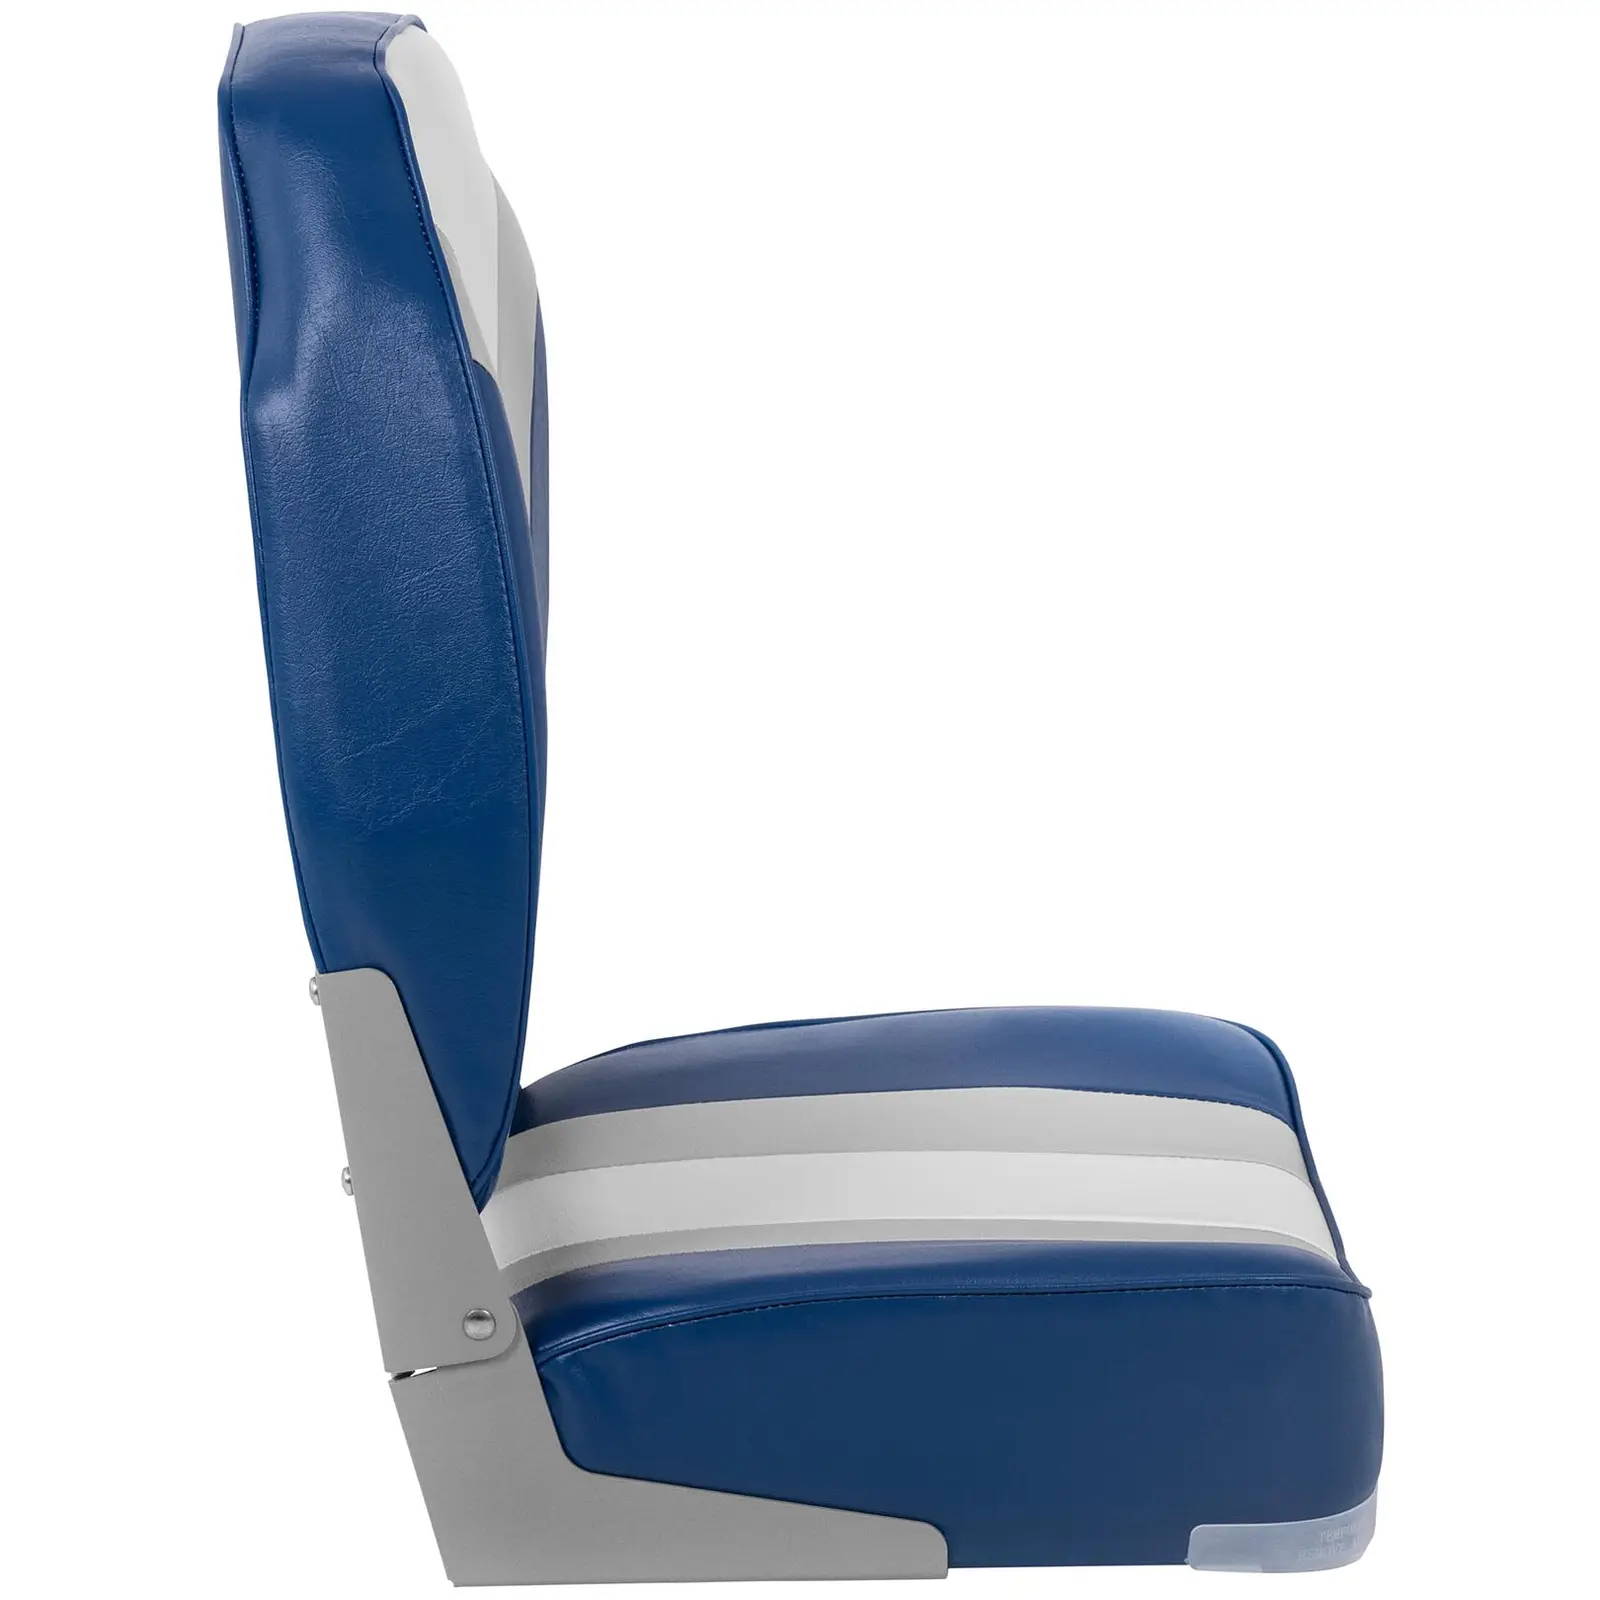 Bootssitz - 36x43x60 cm - Blau, Dunkelgrau, Weiß